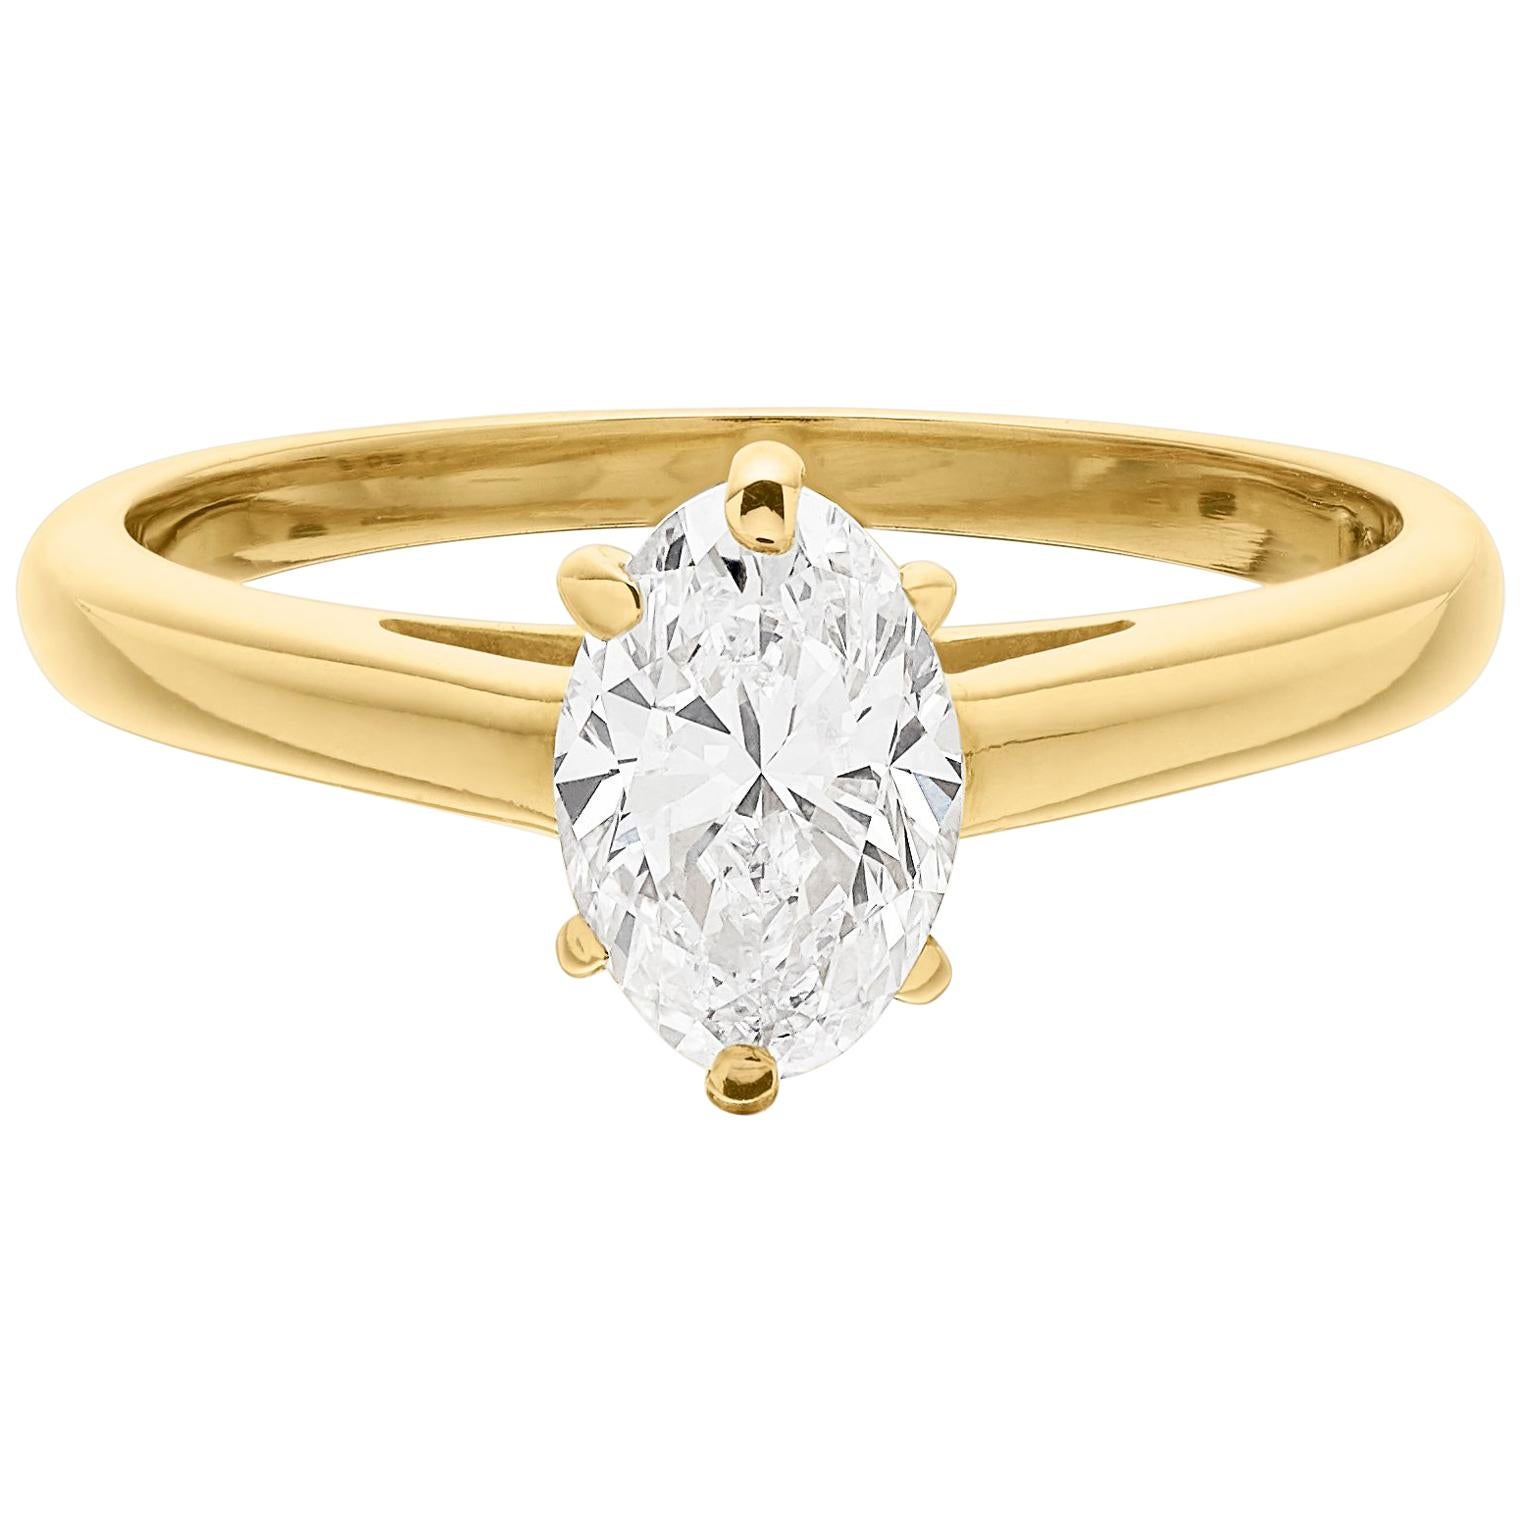 Cartier Diamond, Oval Shape Engagement Ring set in British Hallmarked 18K Gold